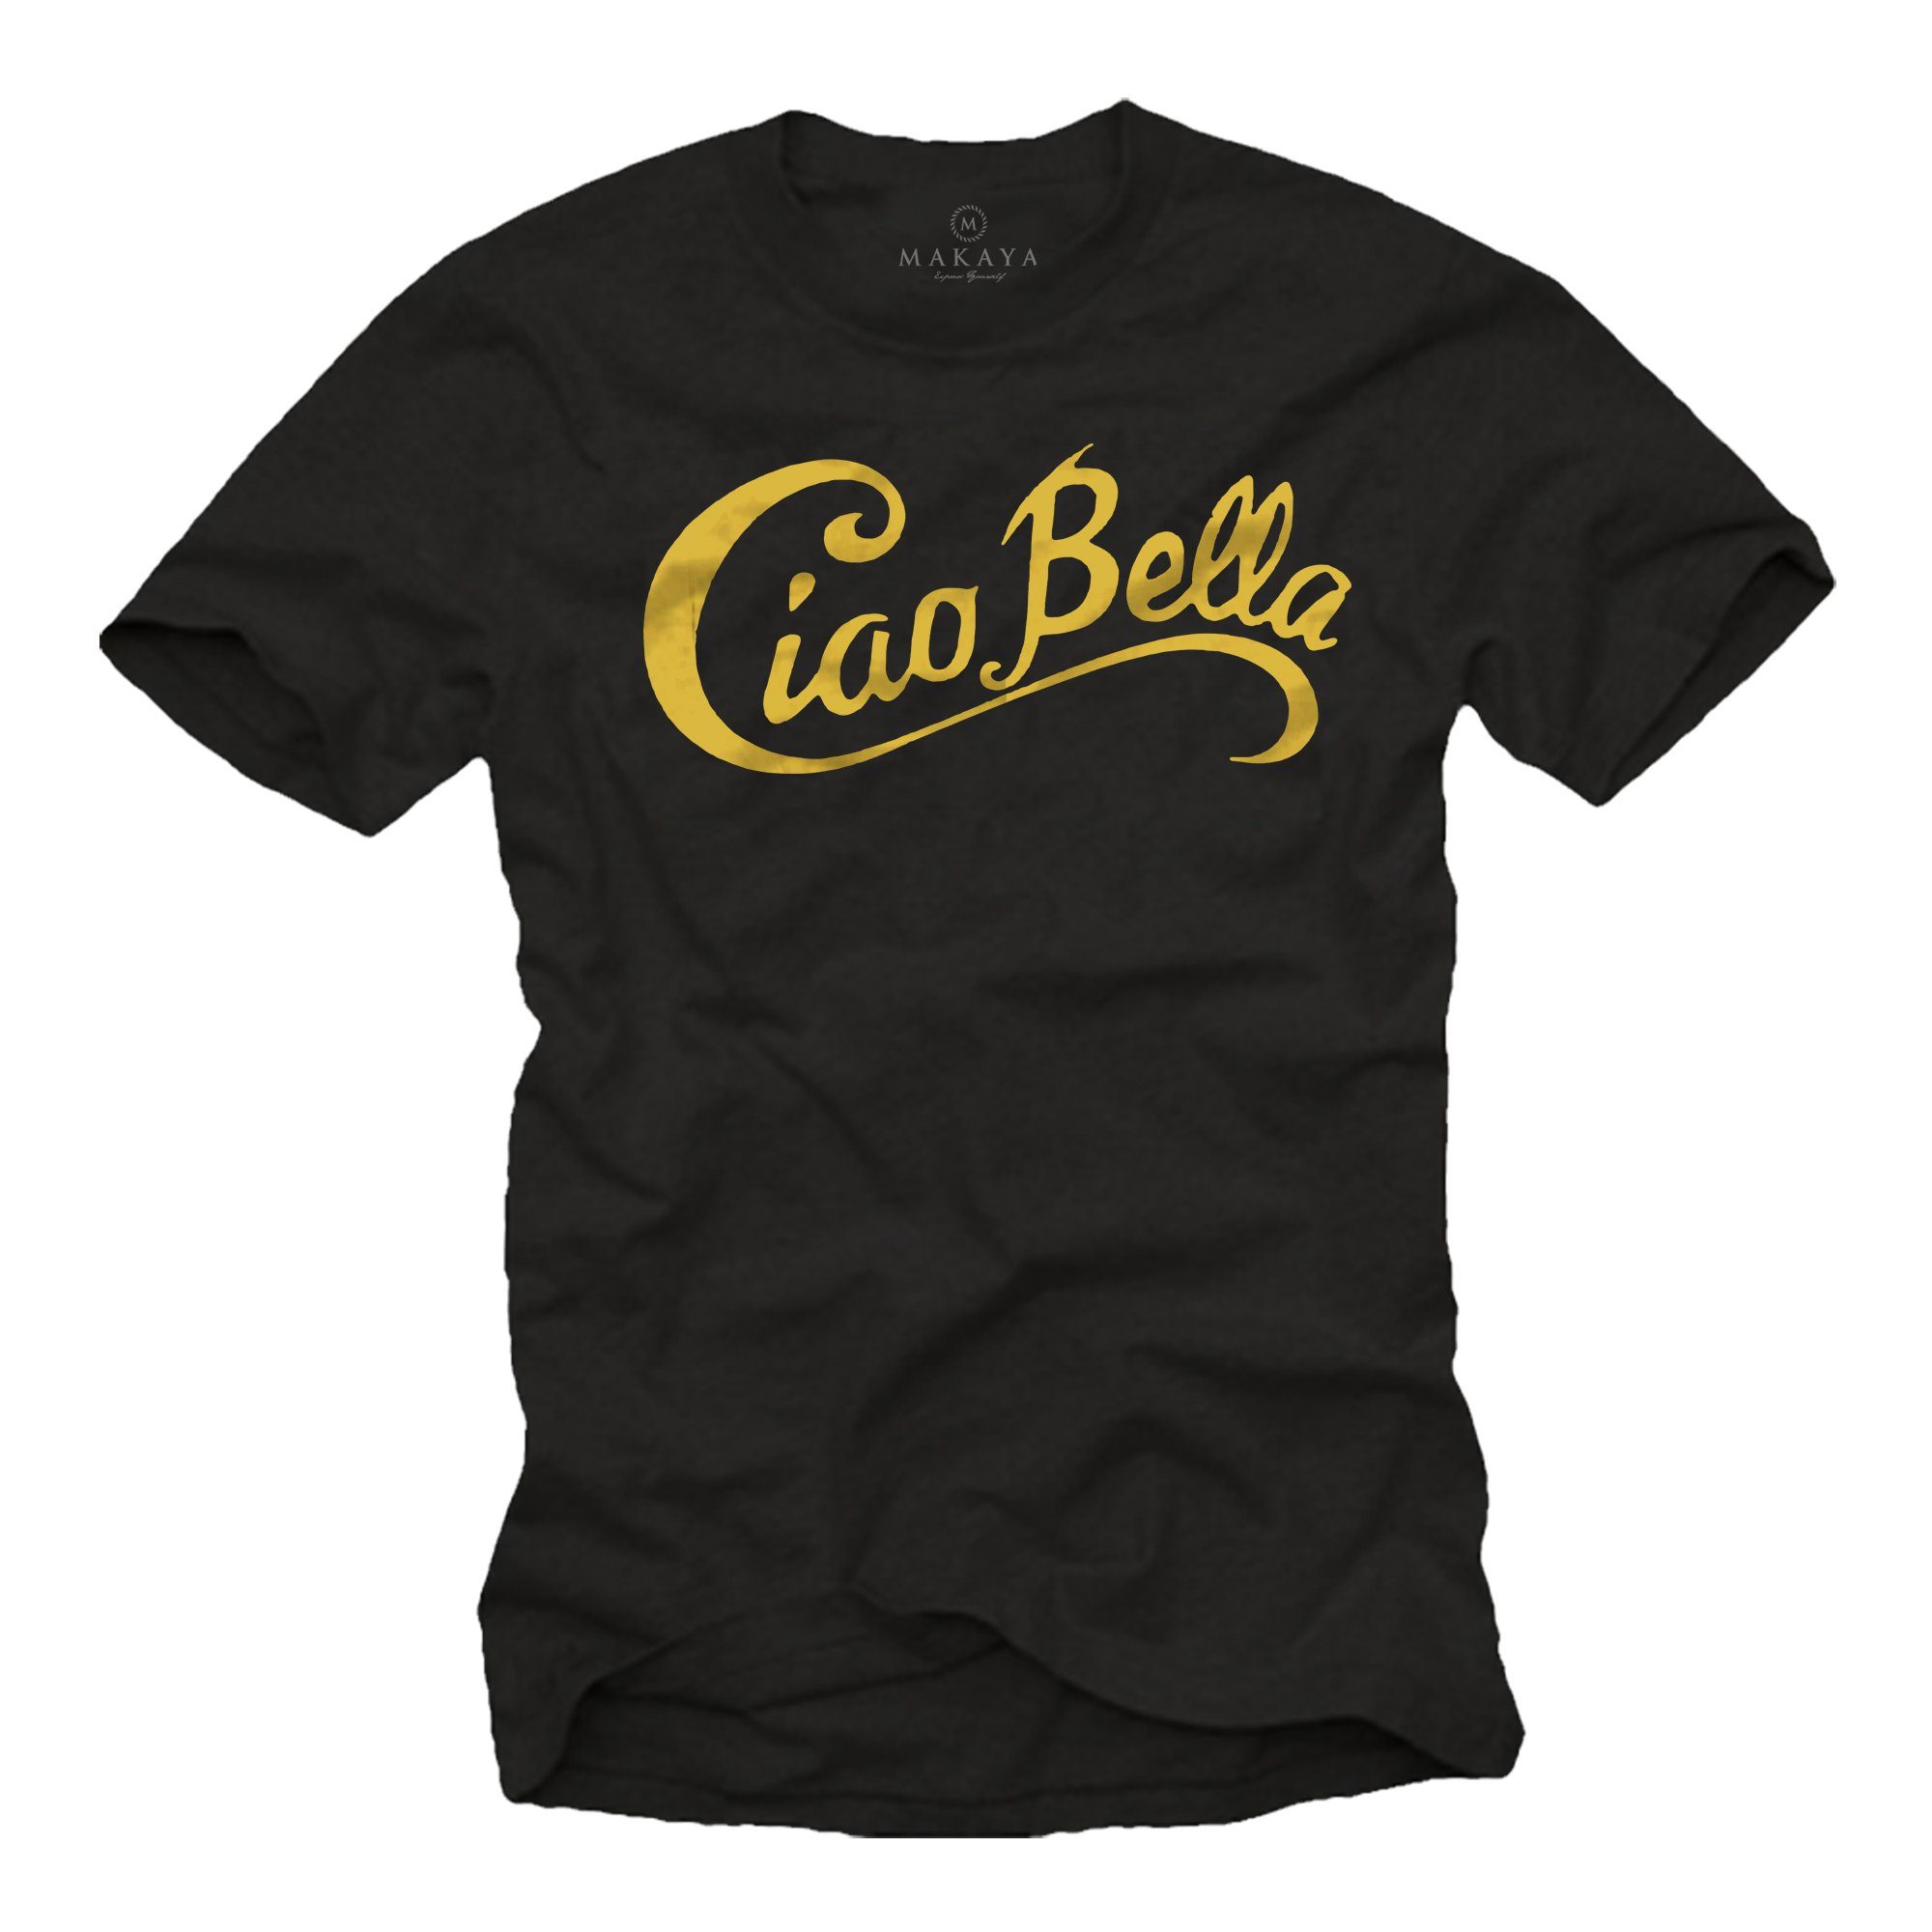 MAKAYA Print-Shirt Herren Italienischer Spruch Logo, Ciao Bella Style Coole Italien Motiv Mode Schwarz